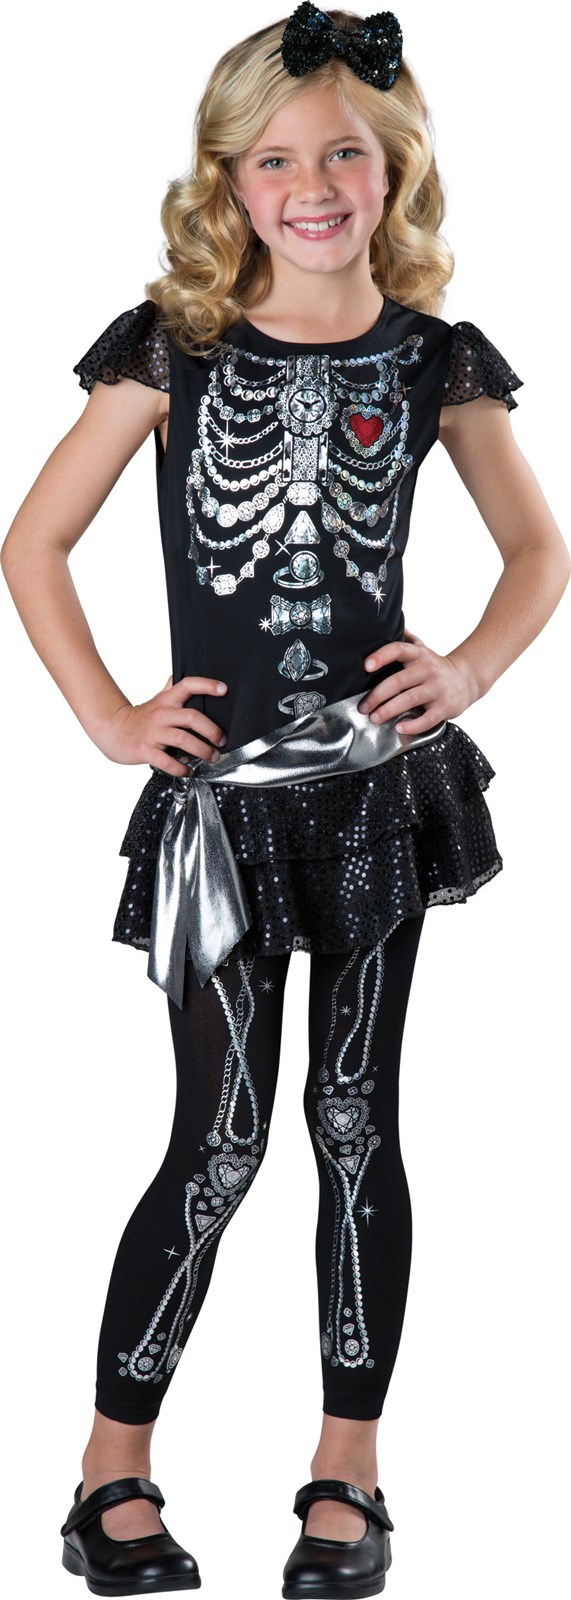 Sparkly Skeleton Costume For Kids